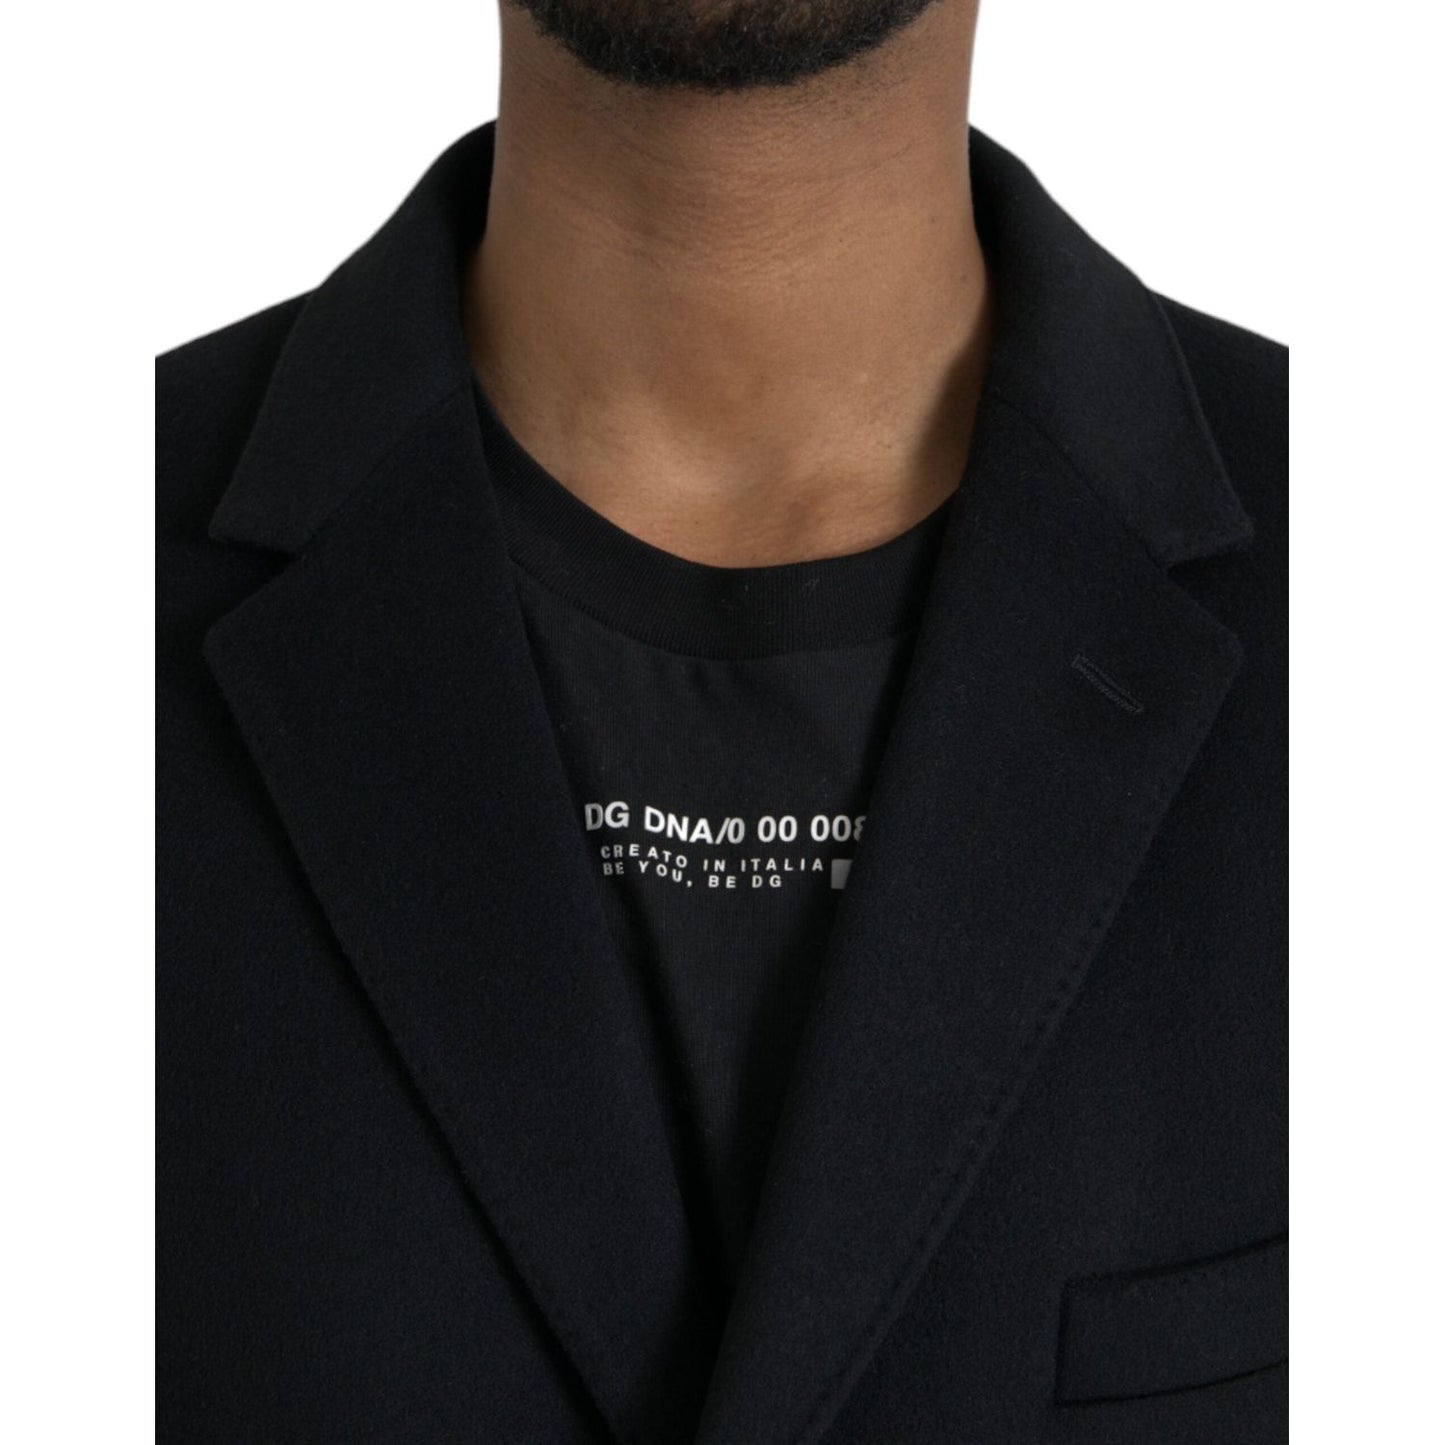 Dolce & Gabbana Black Wool Cashmere Trench Coat Jacket black-wool-cashmere-trench-coat-jacket